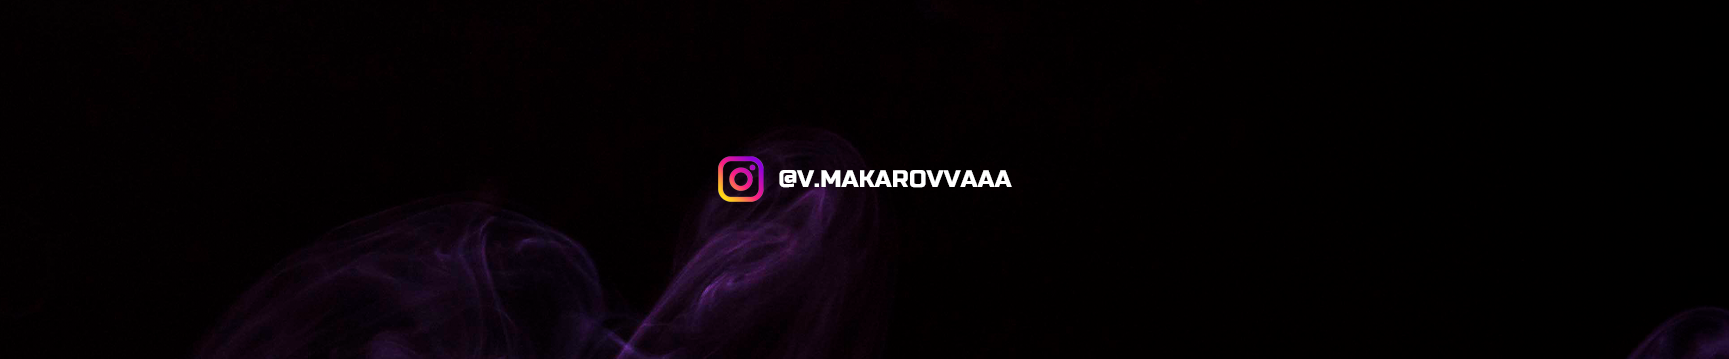 VIKTORIIA MAKAROVA 🇺🇦's profile banner